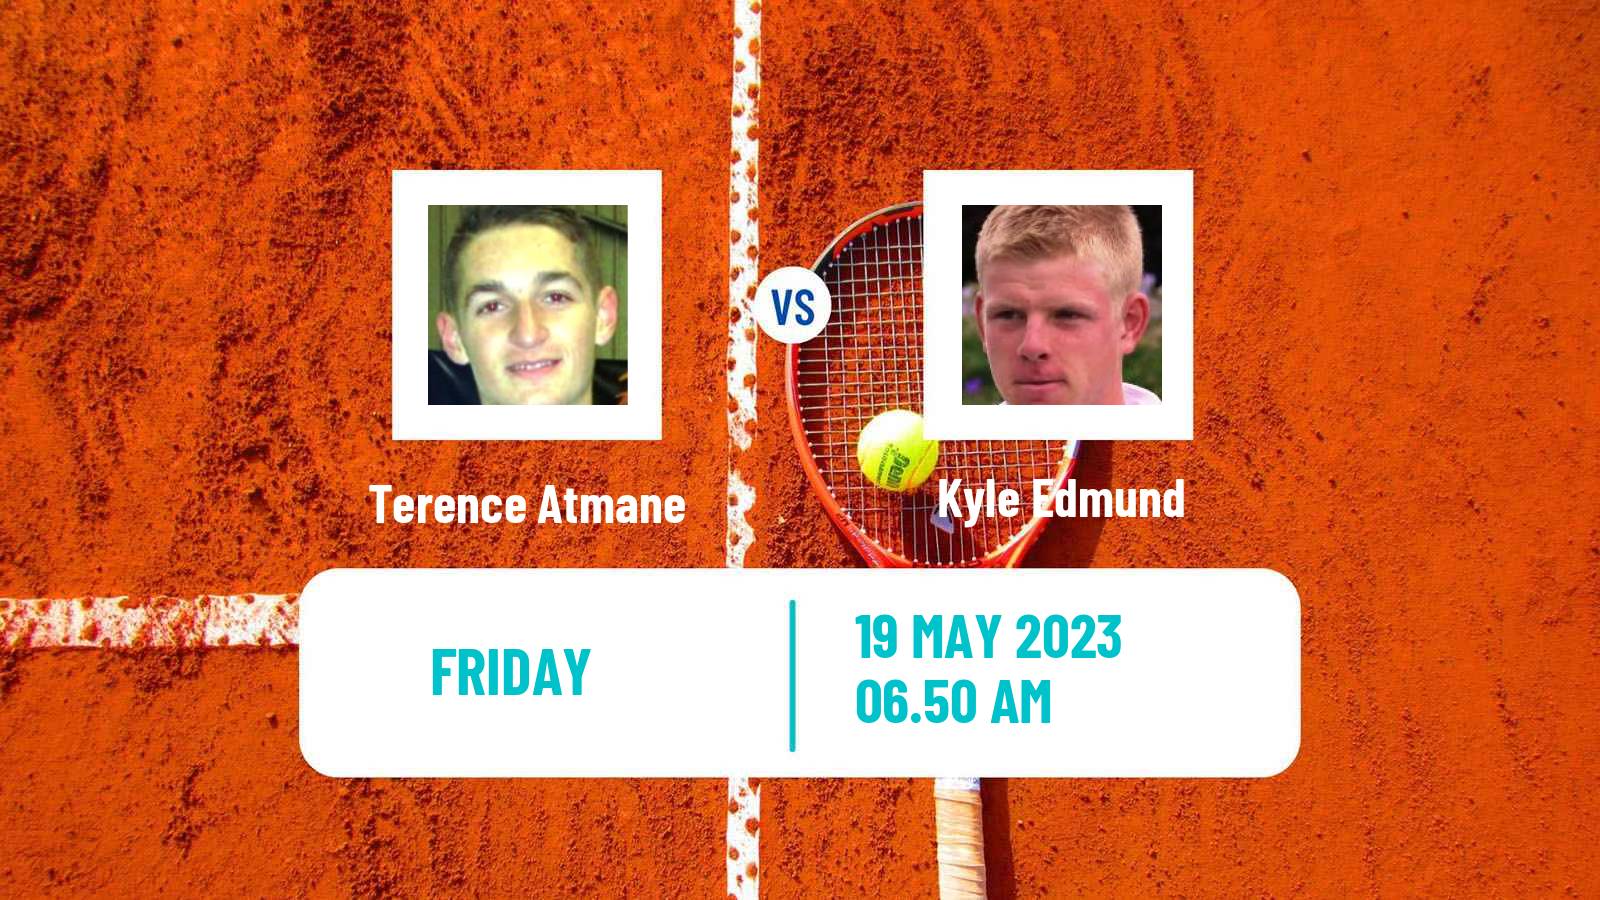 Tennis ITF M25 Reggio Emilia Men Terence Atmane - Kyle Edmund